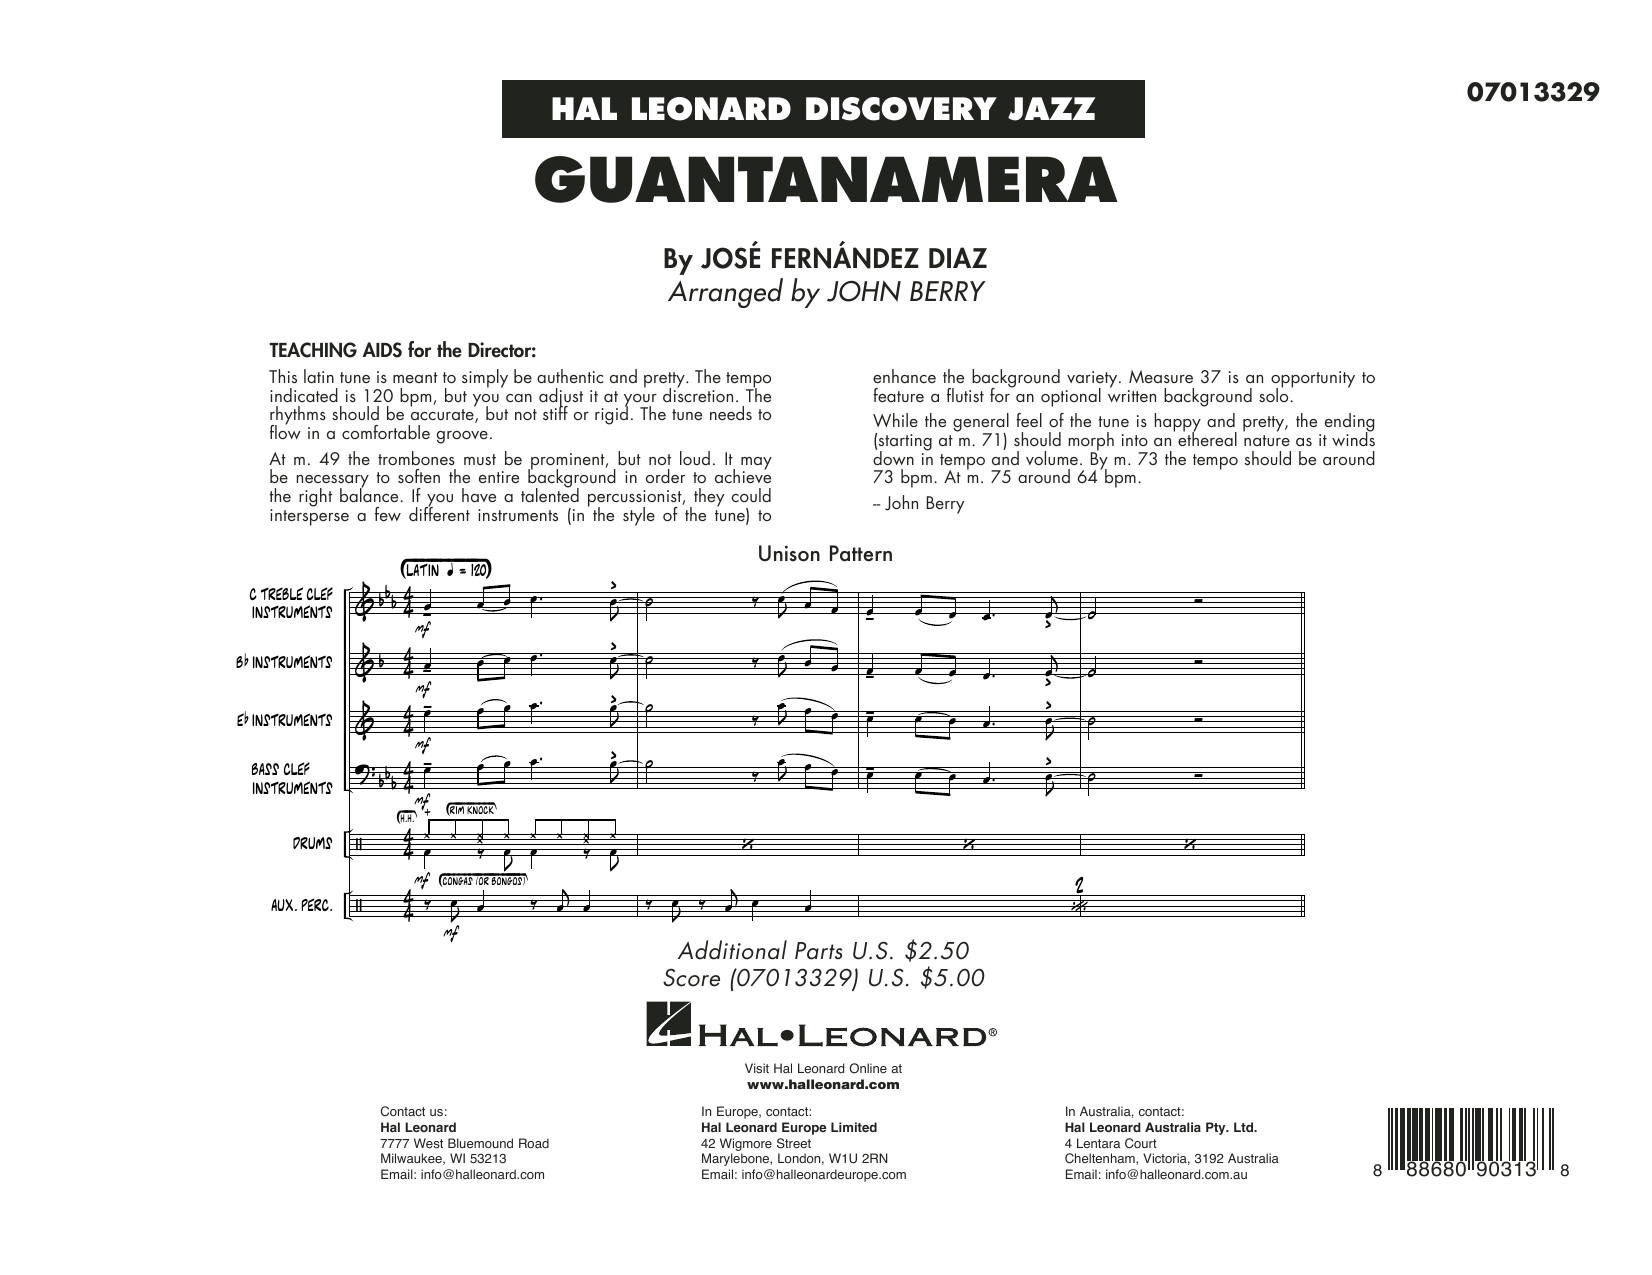 José Fernández Diaz Guantanamera (arr. John Berry) - Conductor Score (Full Score) Sheet Music Notes & Chords for Jazz Ensemble - Download or Print PDF